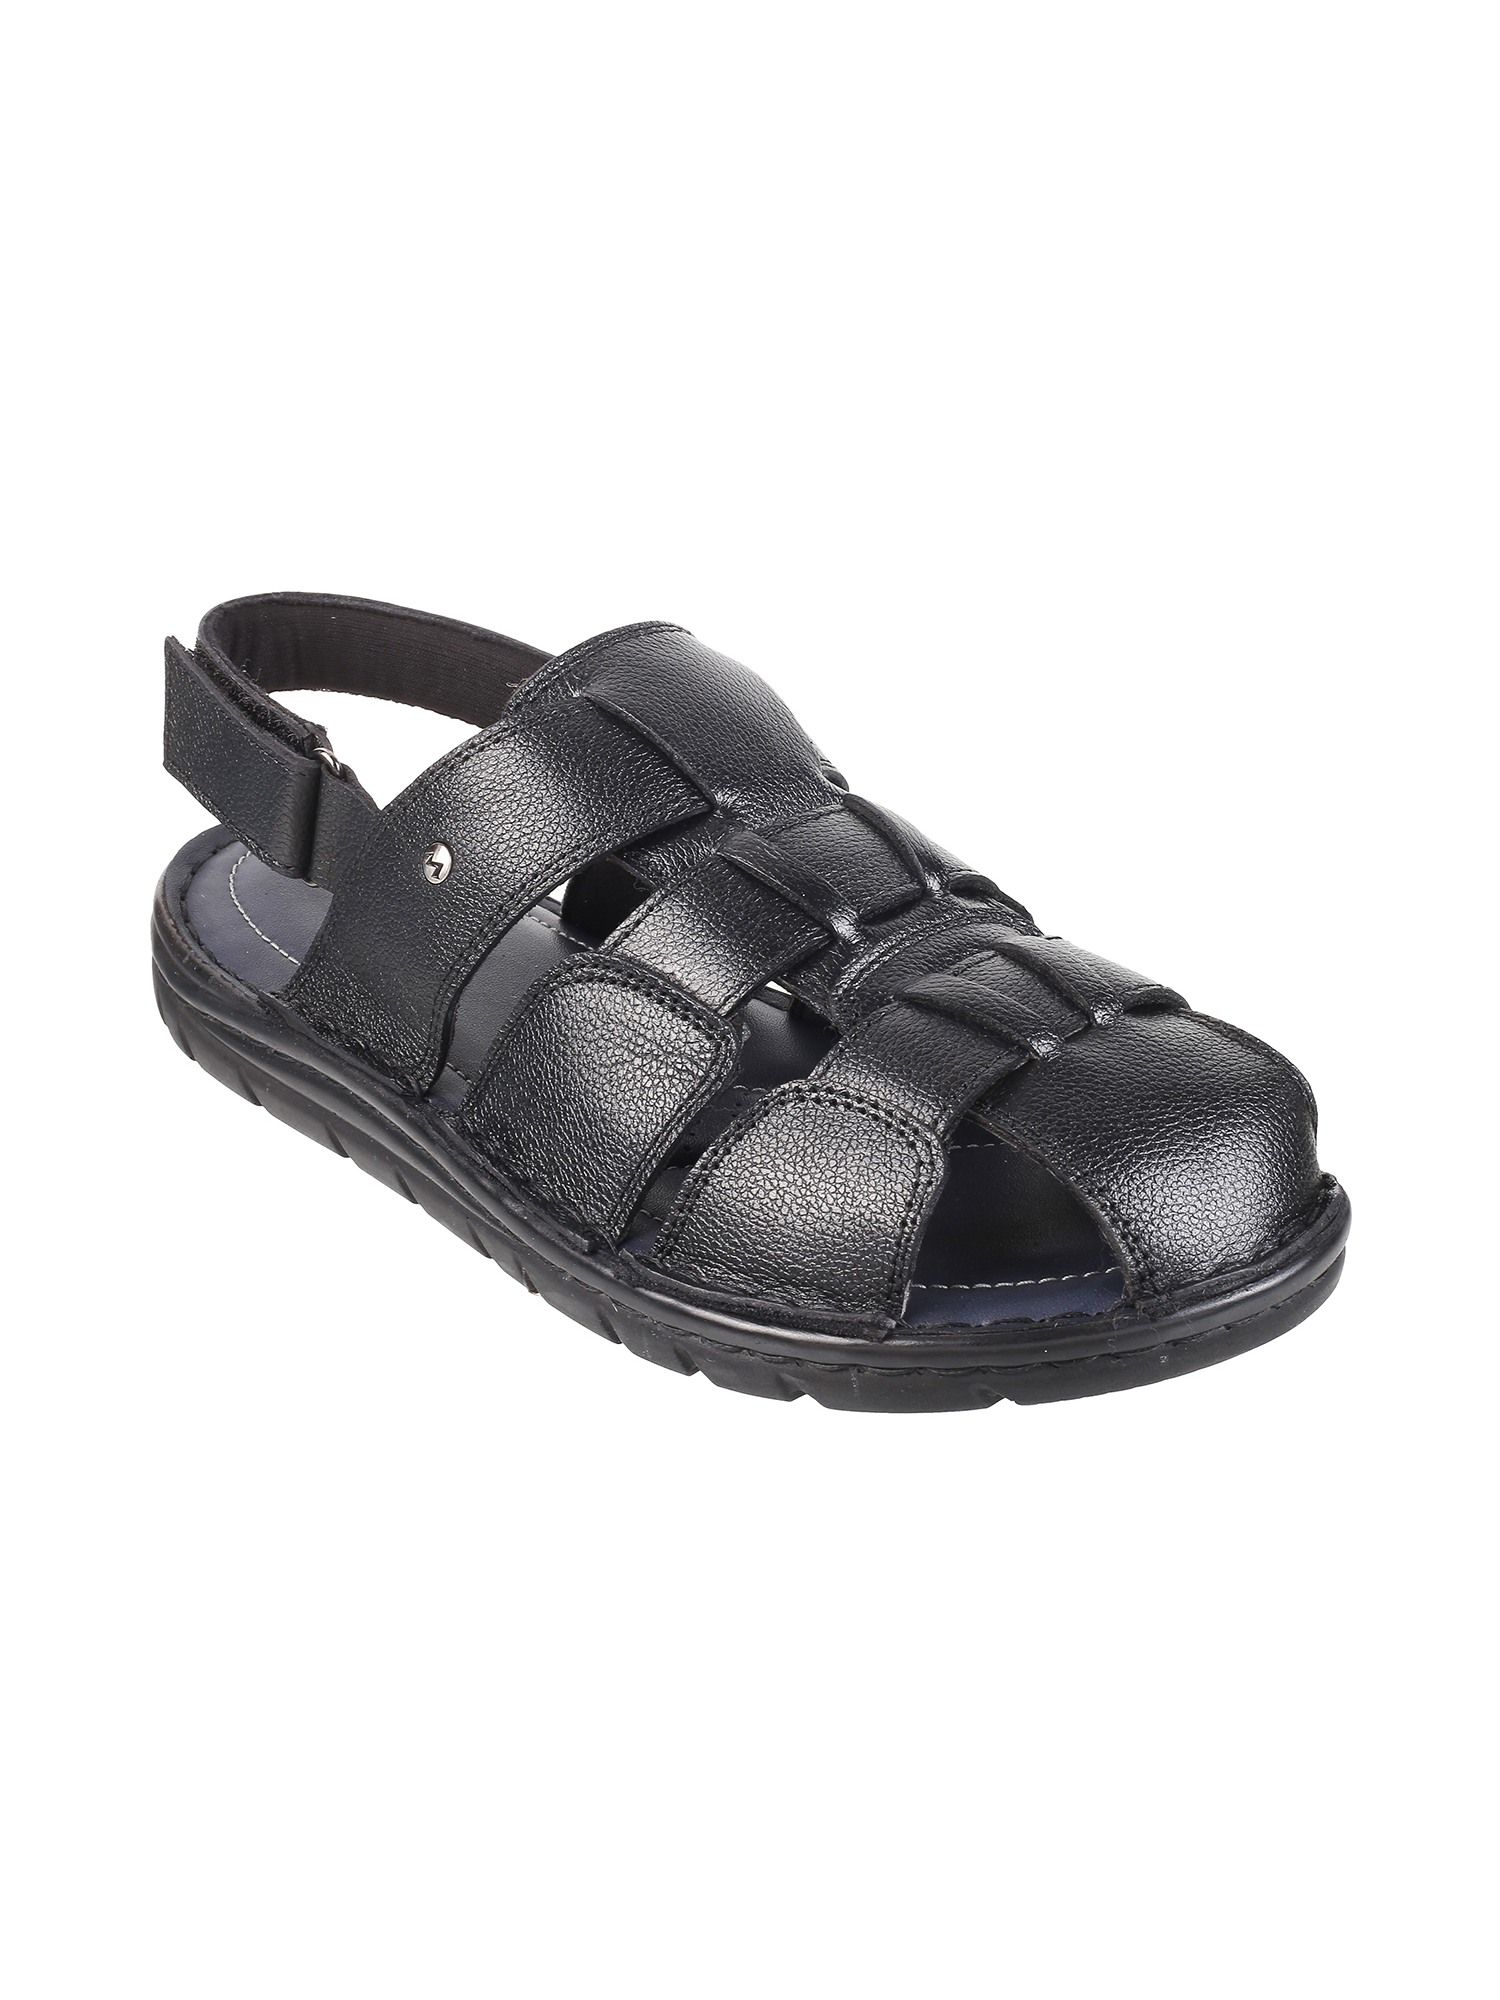 Black Leather Sandals for Men Open Toe Mens Sandals With Buckle Strap  Gladiator Mens Sandals Greek Strappy Summer Shoes for Men Fisherman - Etsy